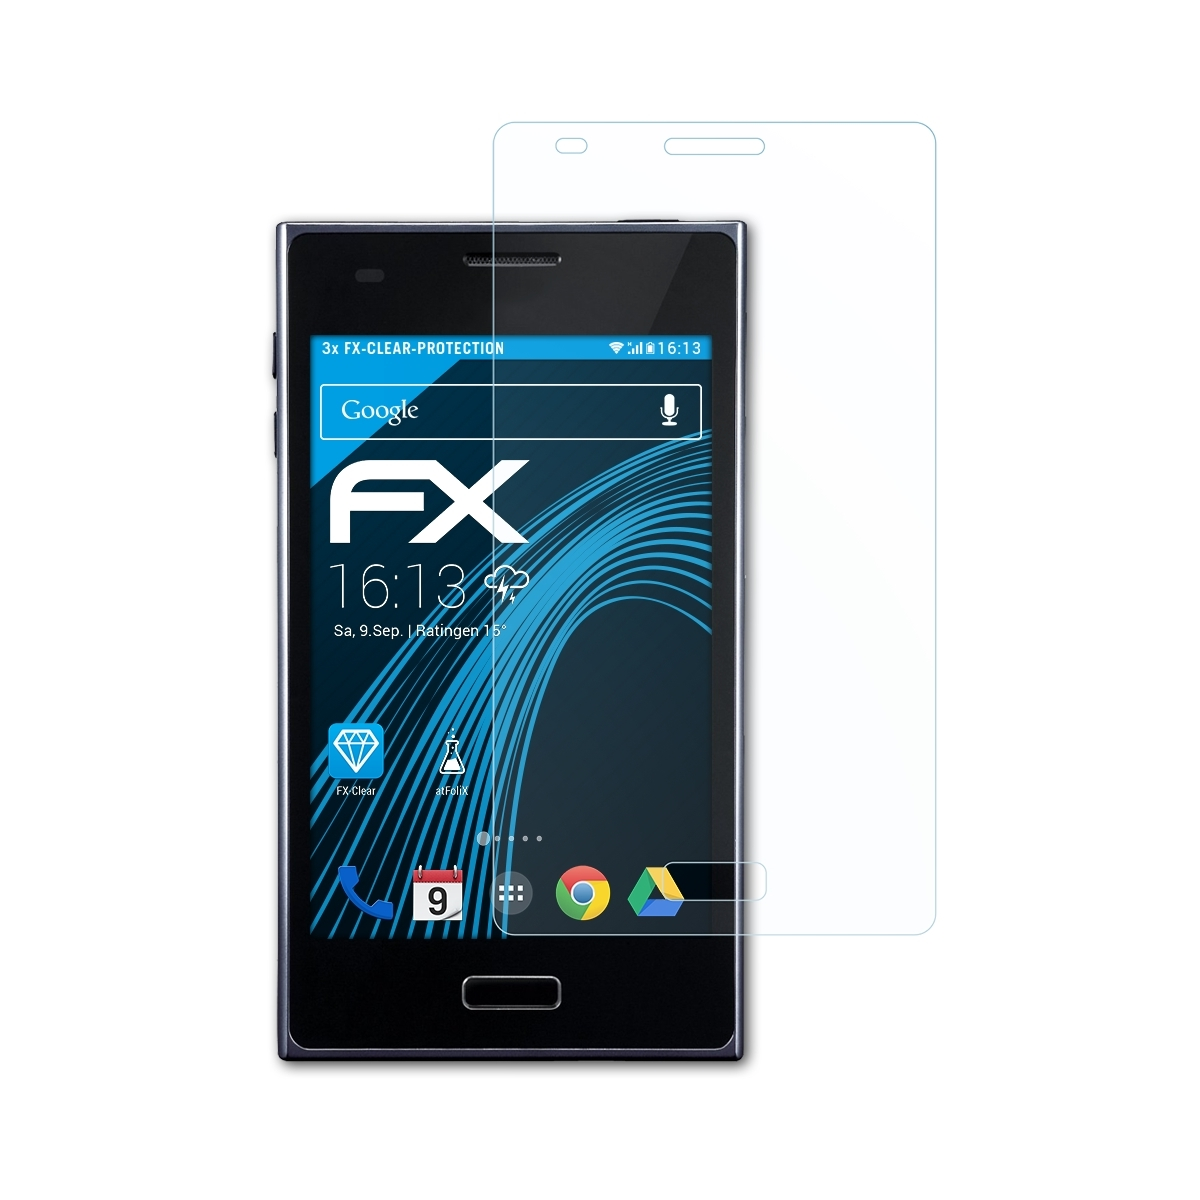 Displayschutz(für (E610)) LG ATFOLIX FX-Clear 3x L5 Optimus